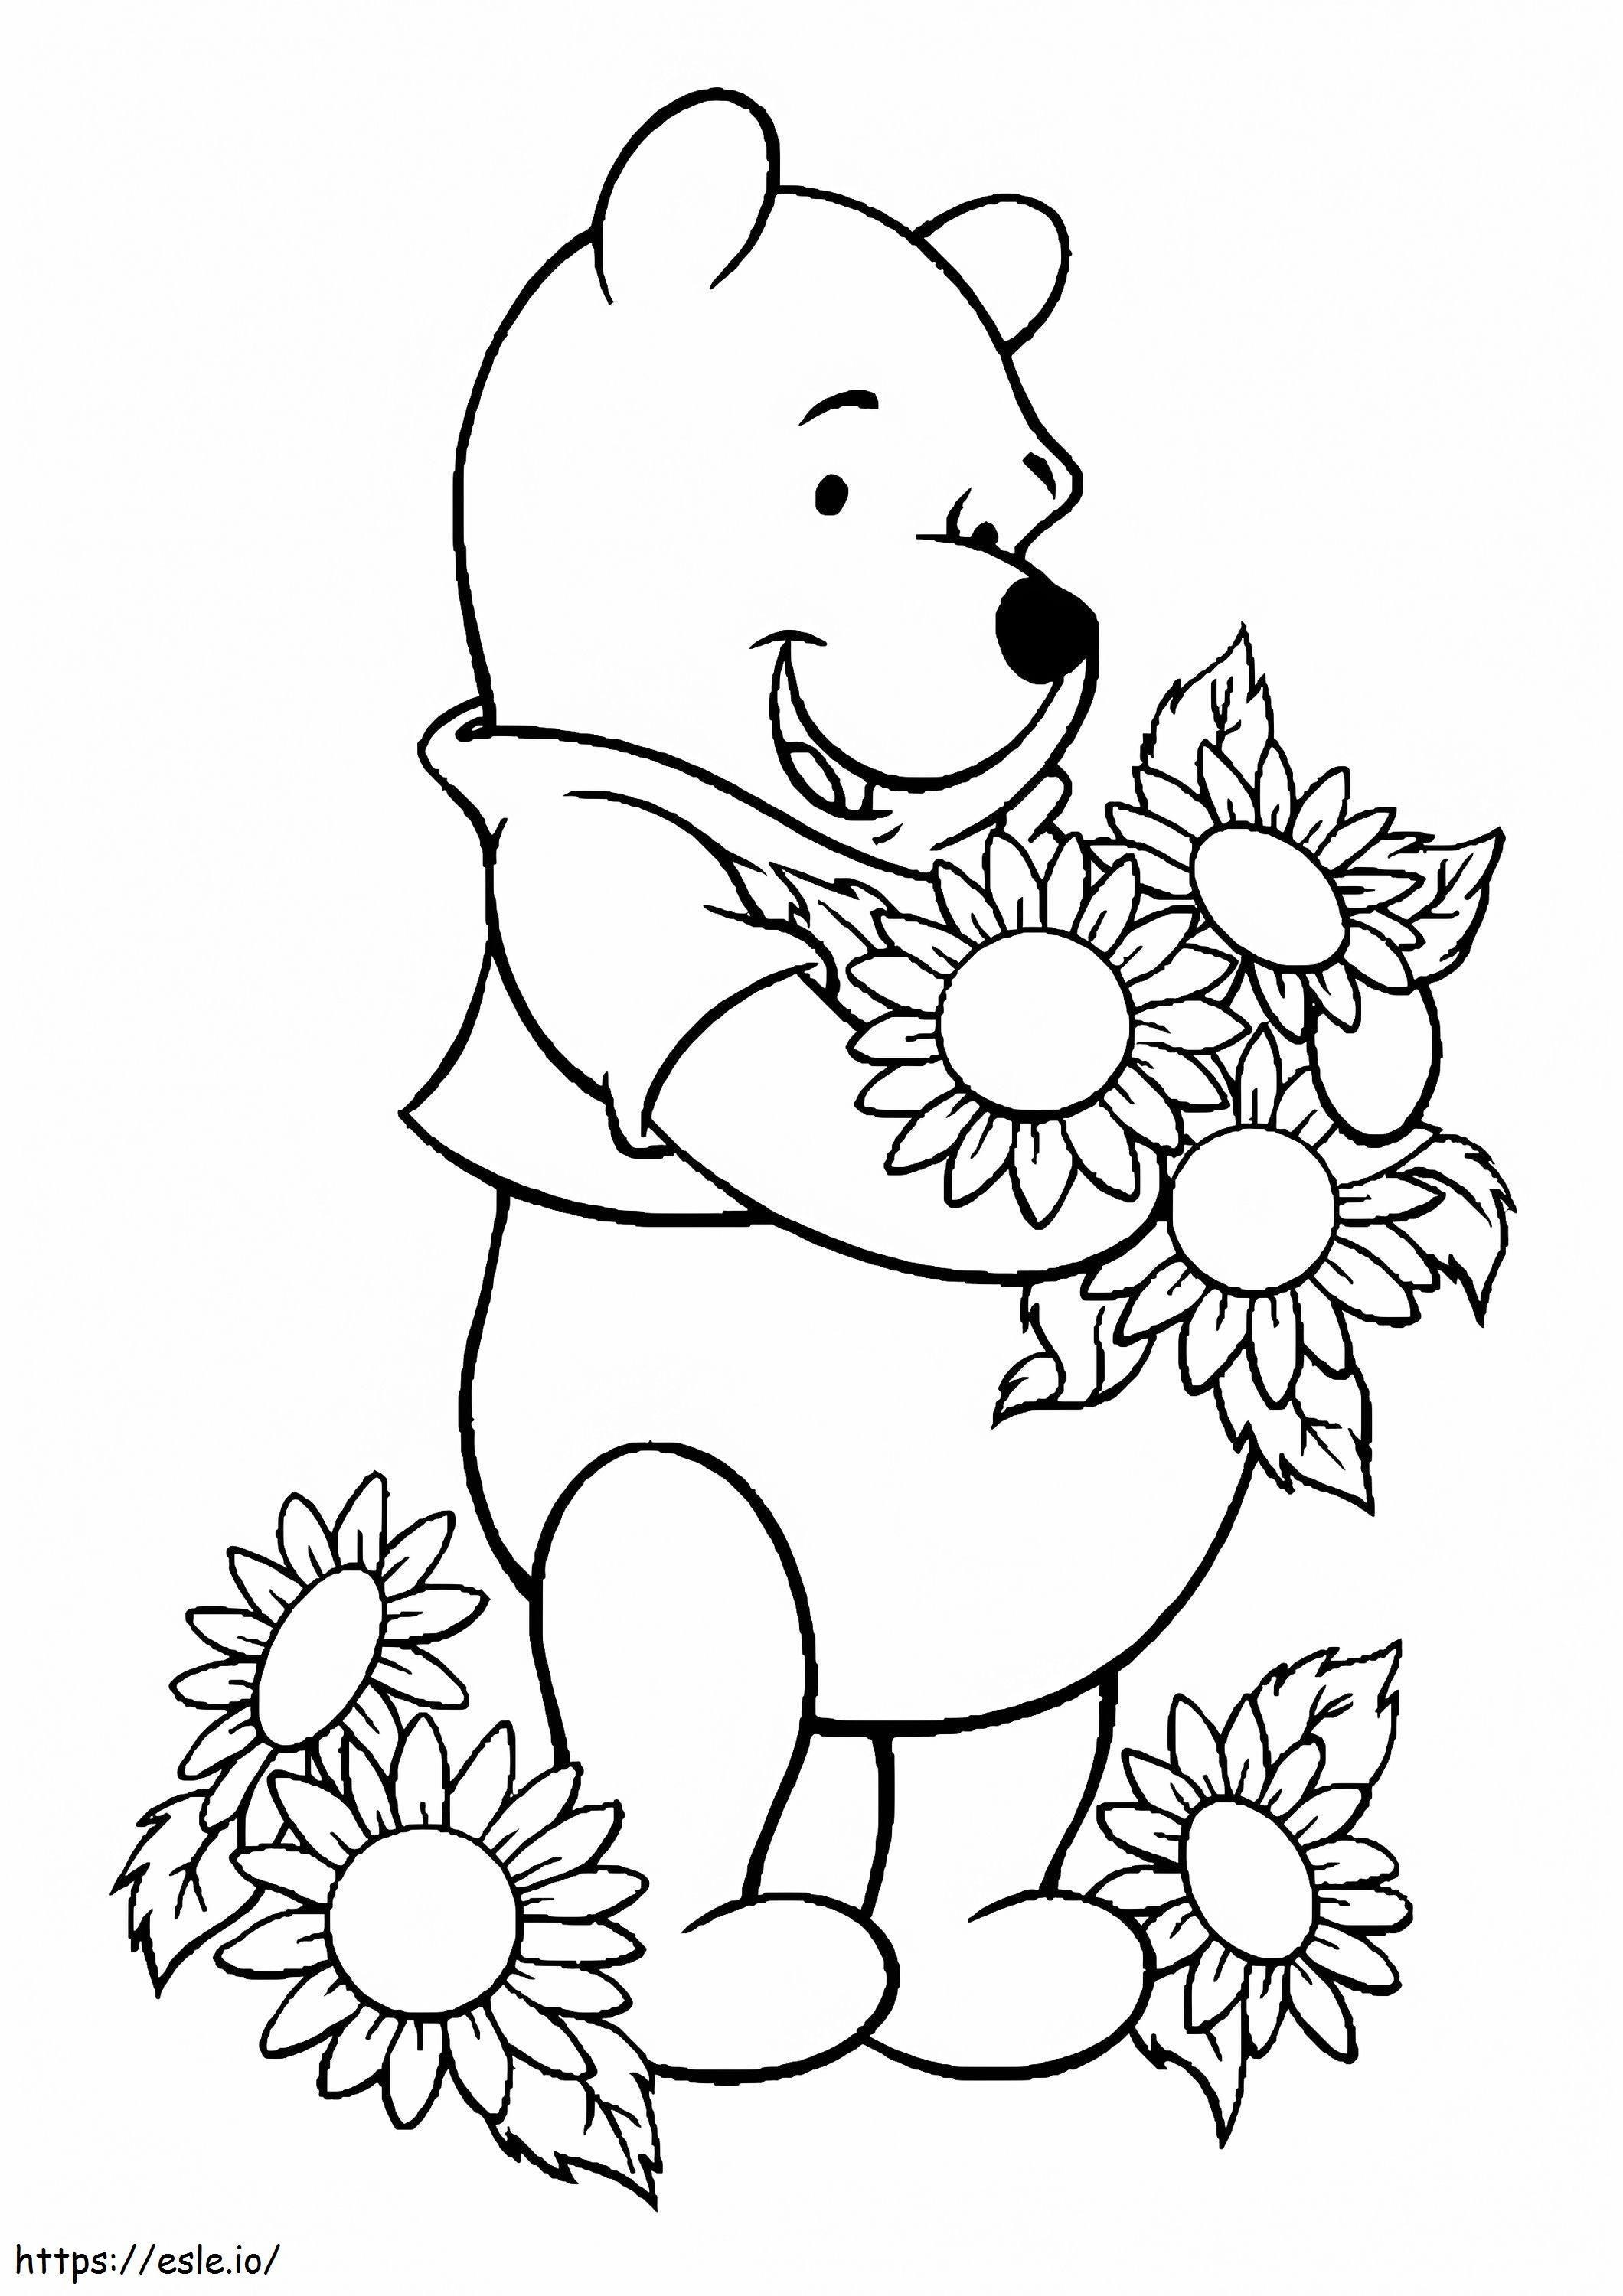 1526549763 The Pooh adora florile1 A4 de colorat